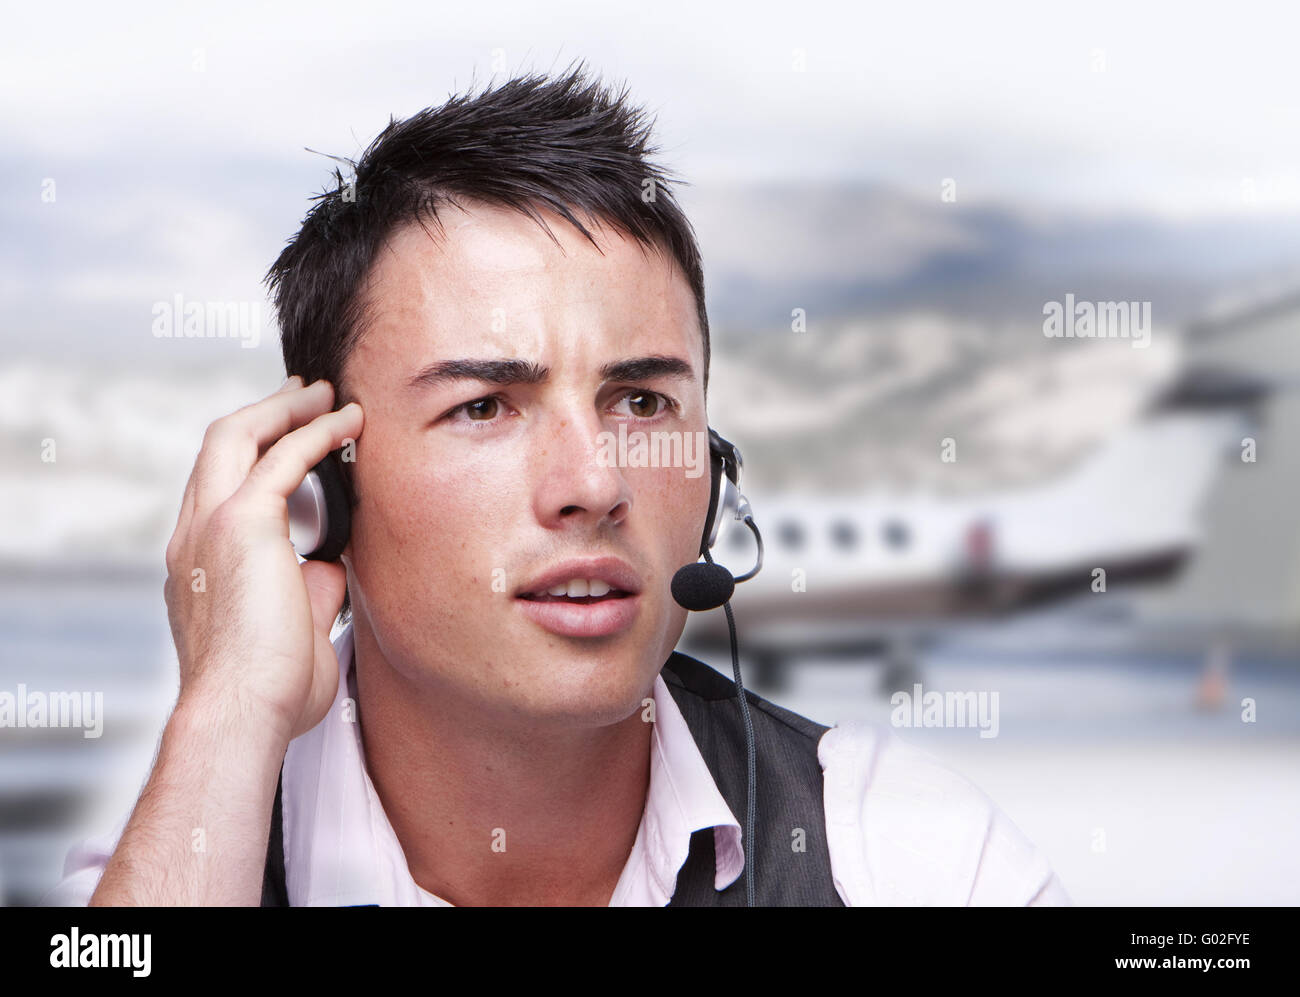 young smiling men operator with headphones portrait Stock Photo